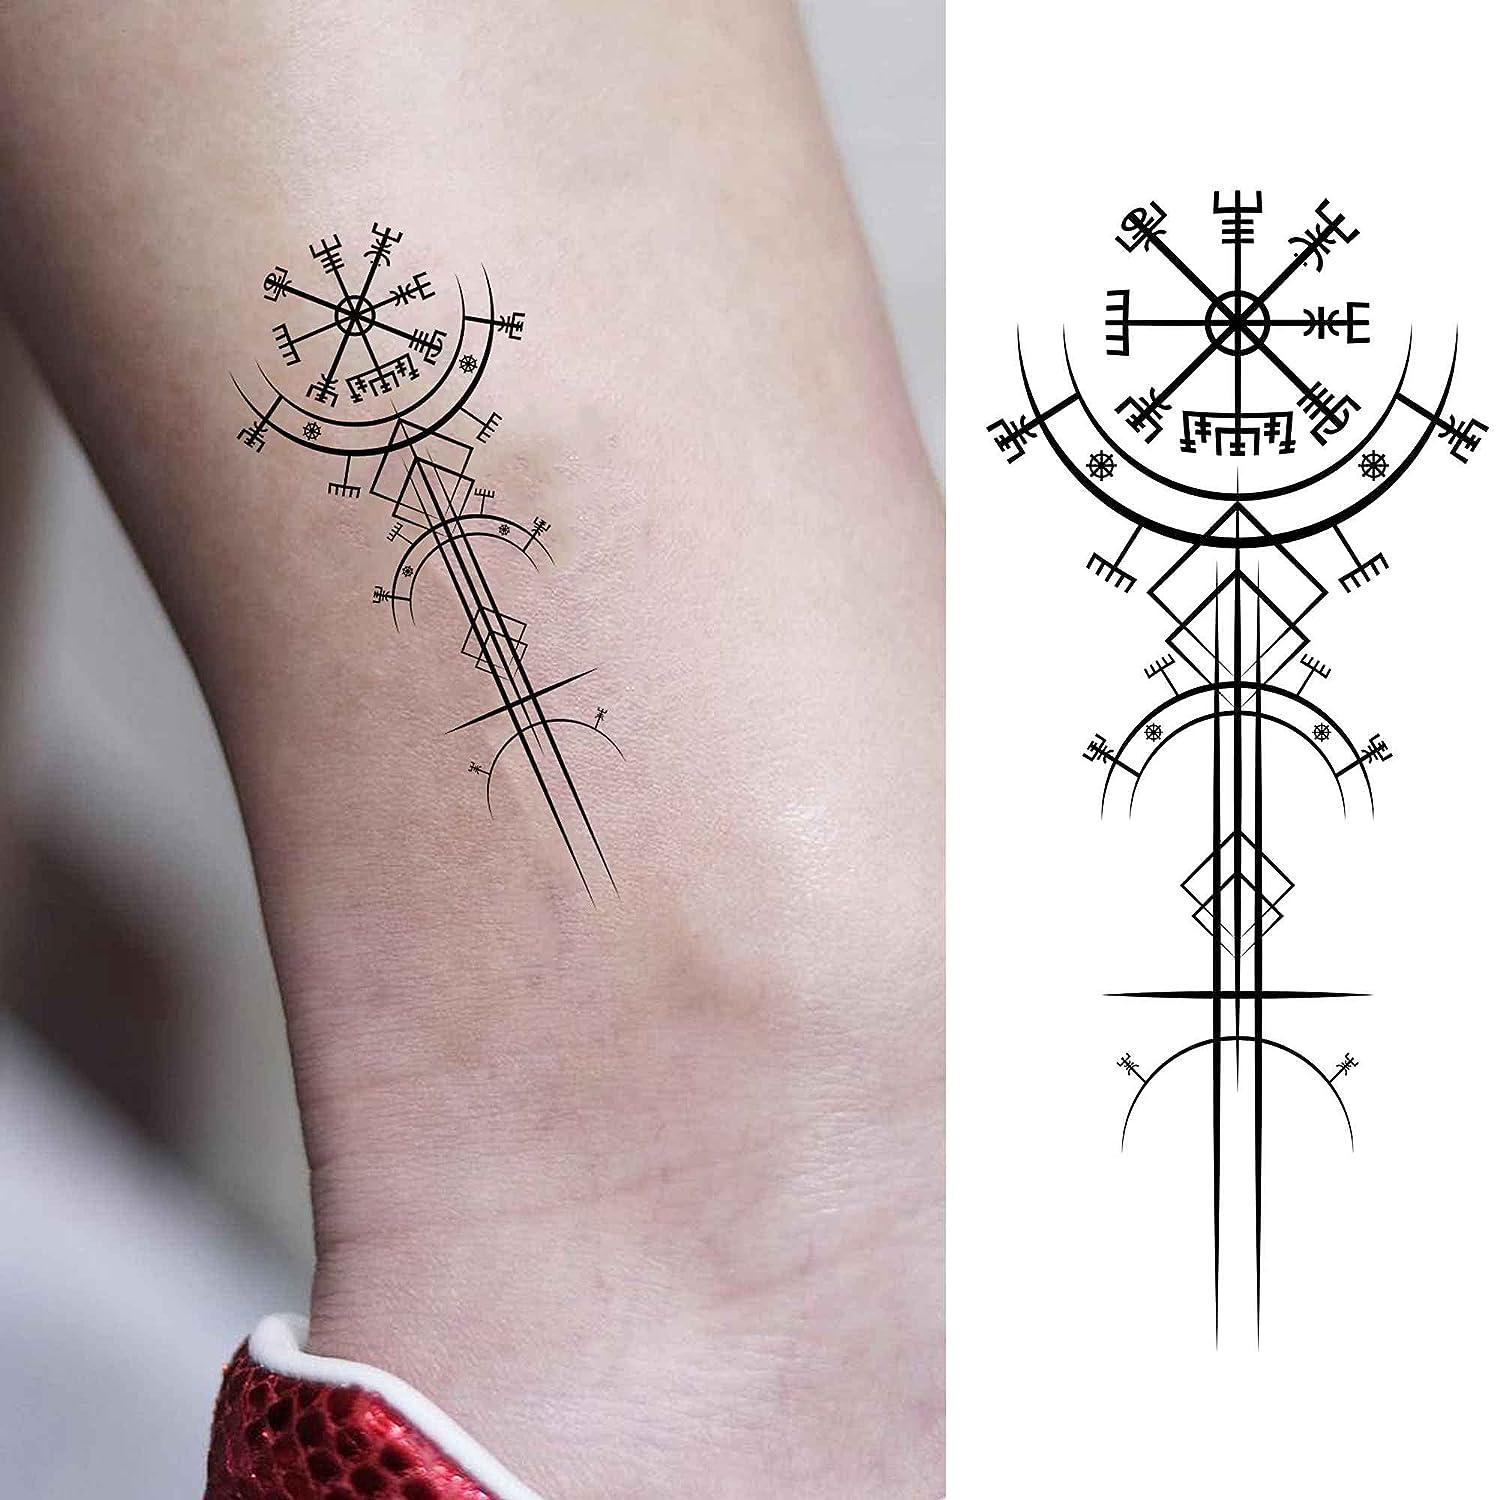 15 Distinctive Compass Tattoo Designs – 2023 | Styles At Life